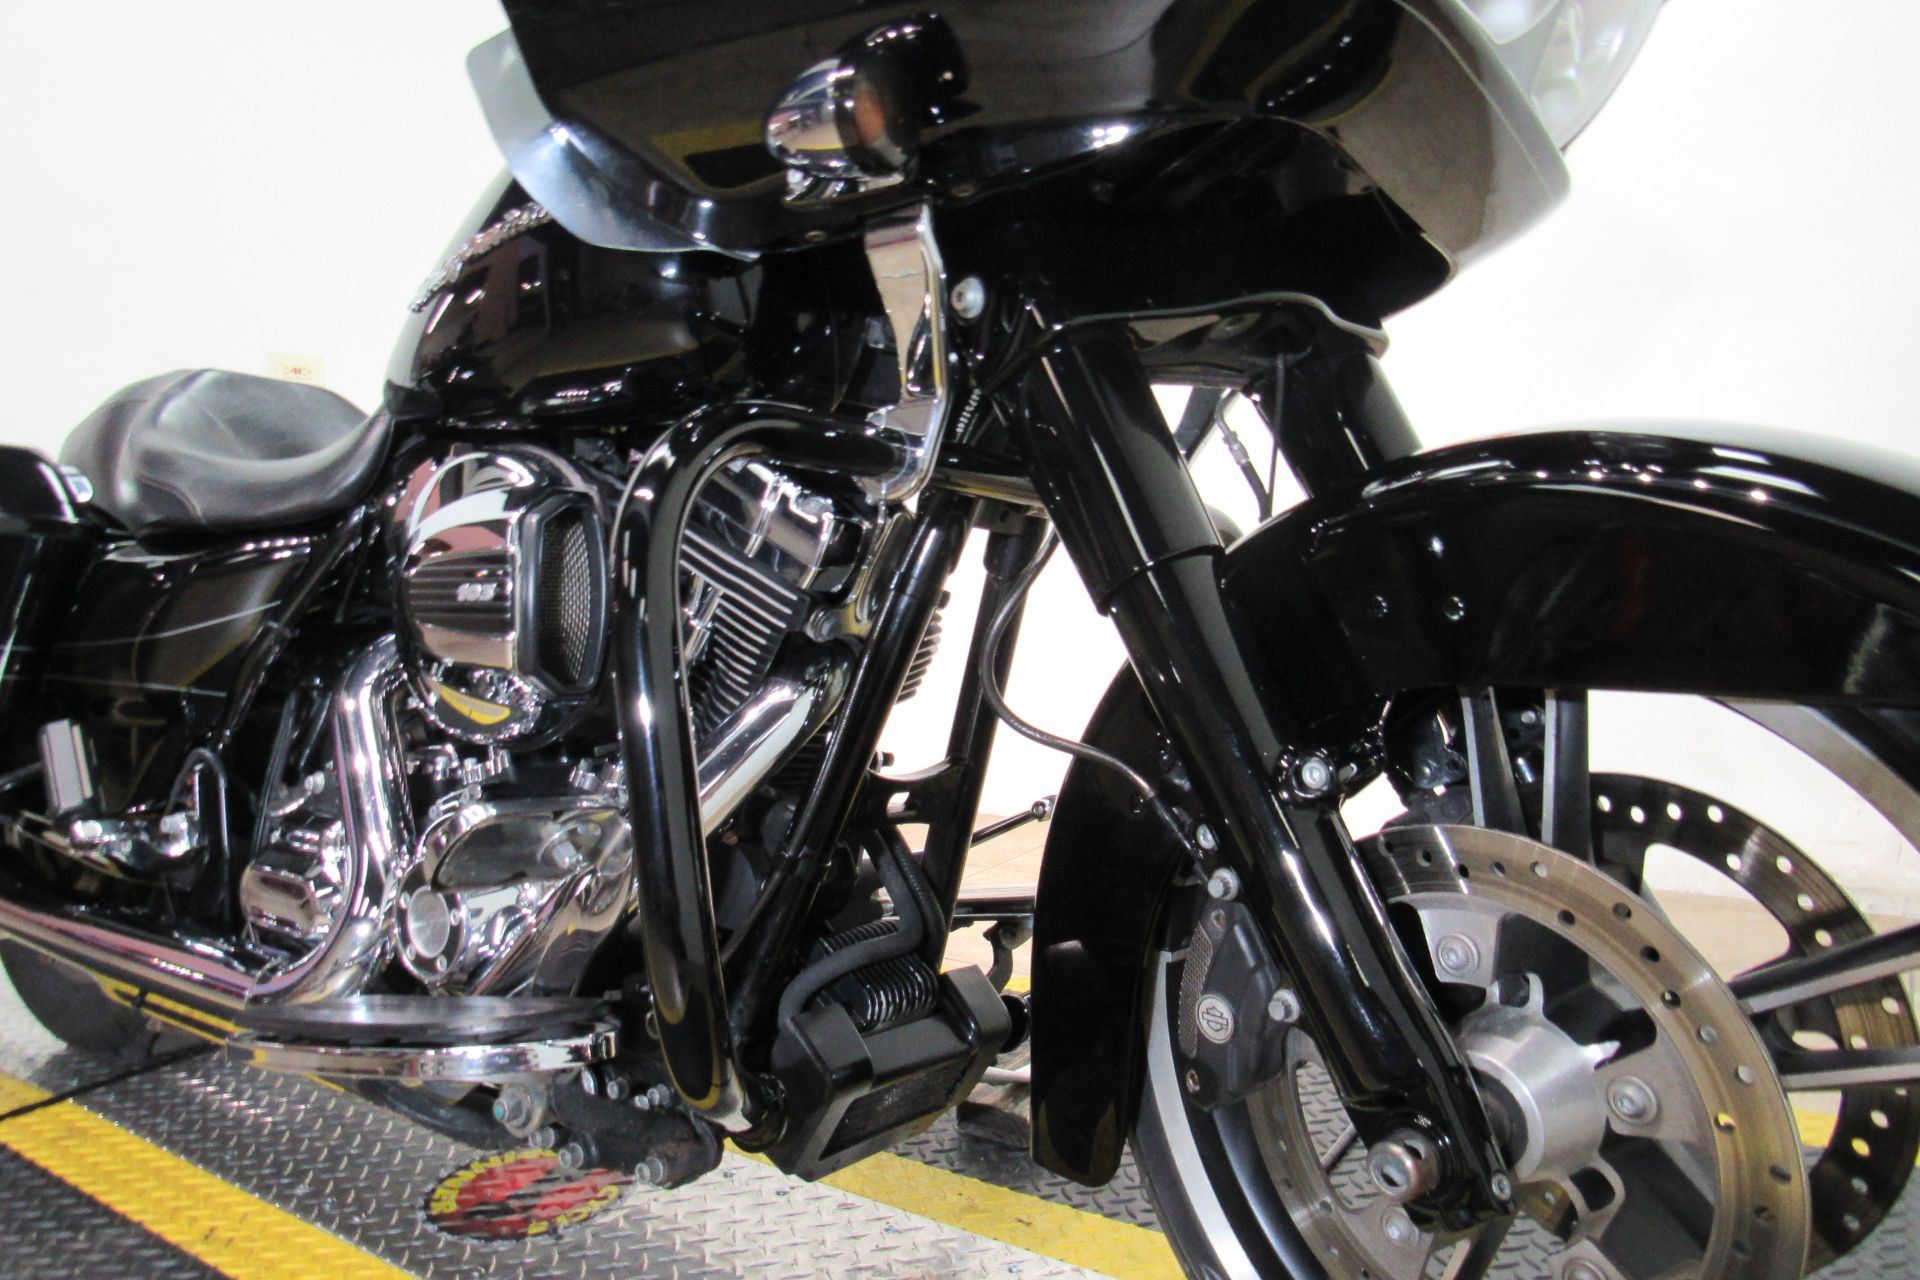 2015 Harley-Davidson Road Glide® Special in Temecula, California - Photo 17